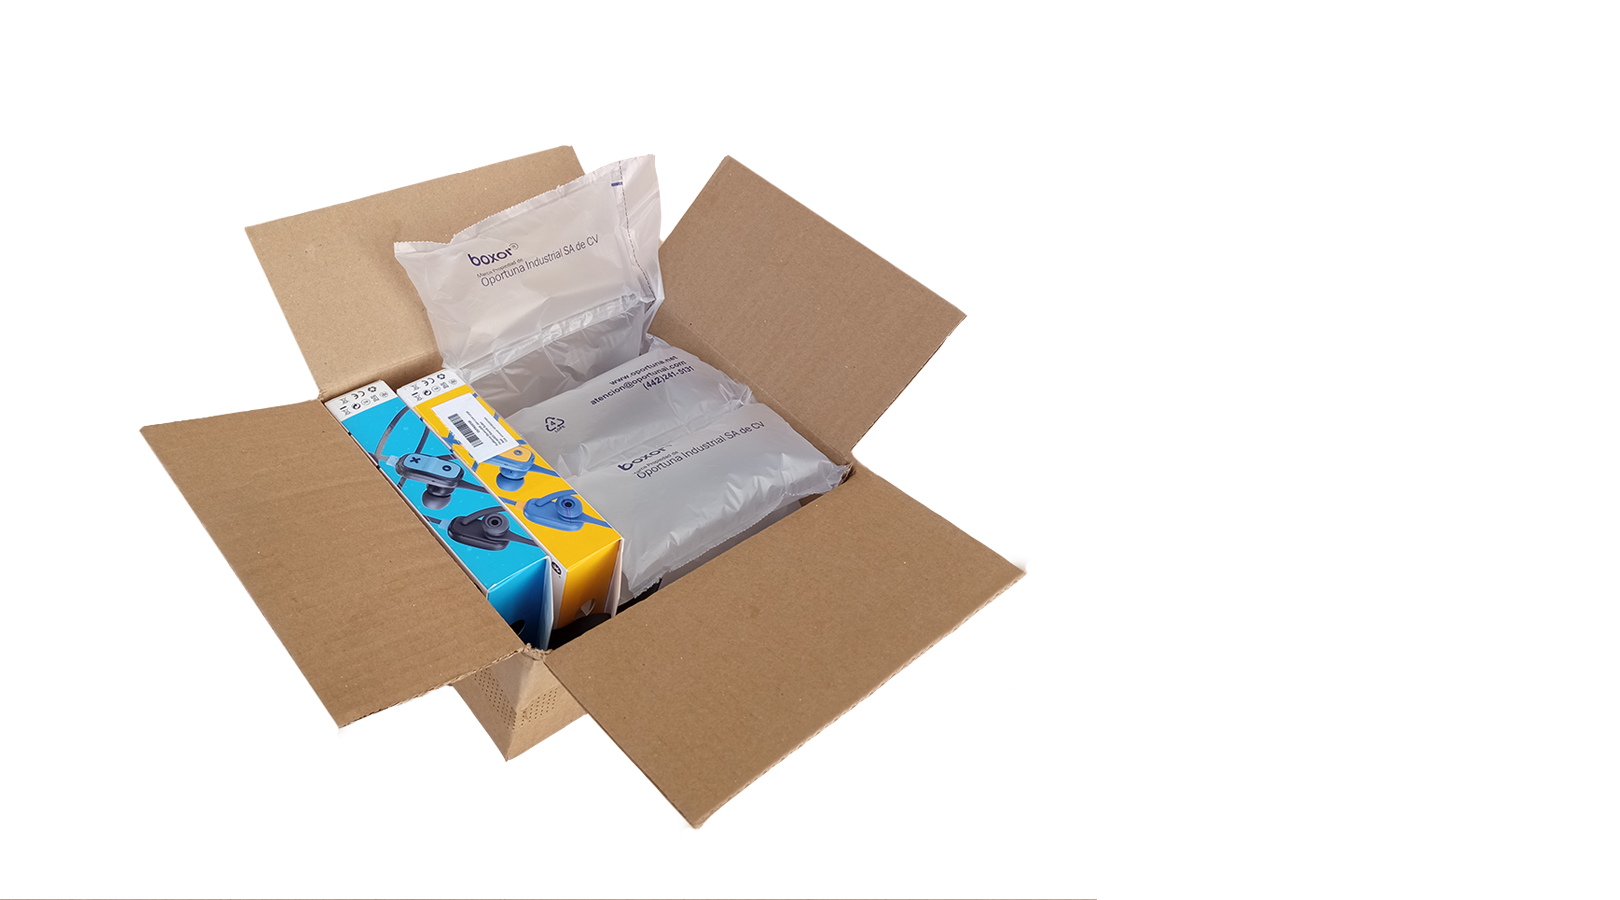 Insumos para paquetes - Amazon rastreo Insumos para paquetes - Amazon rastreo